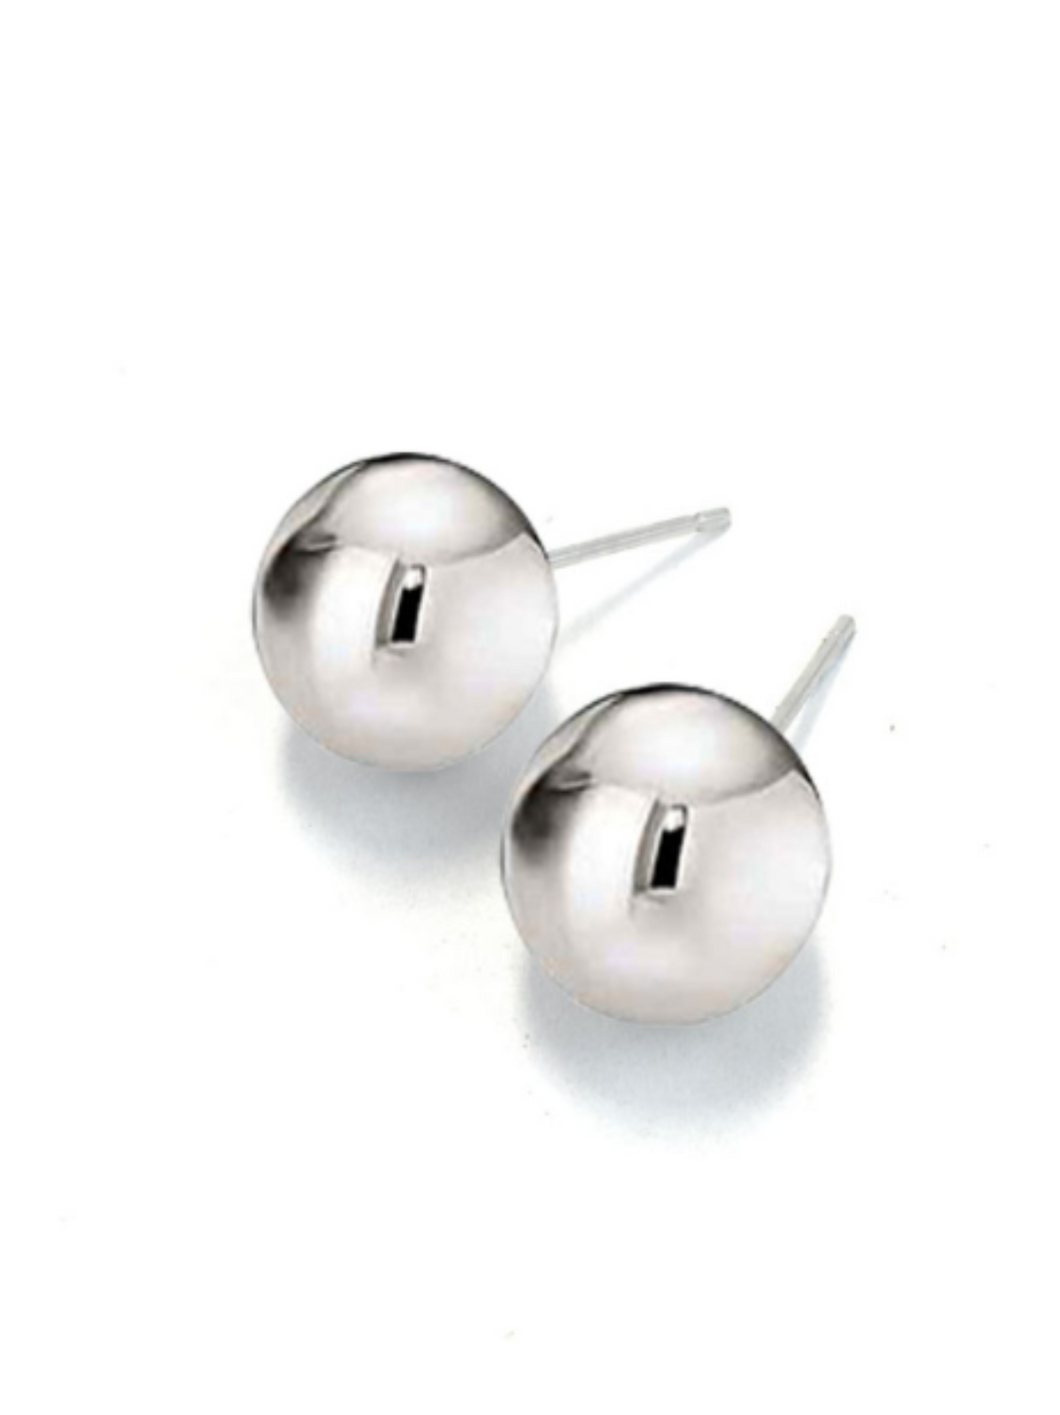 Silver Ball Earrings: Large